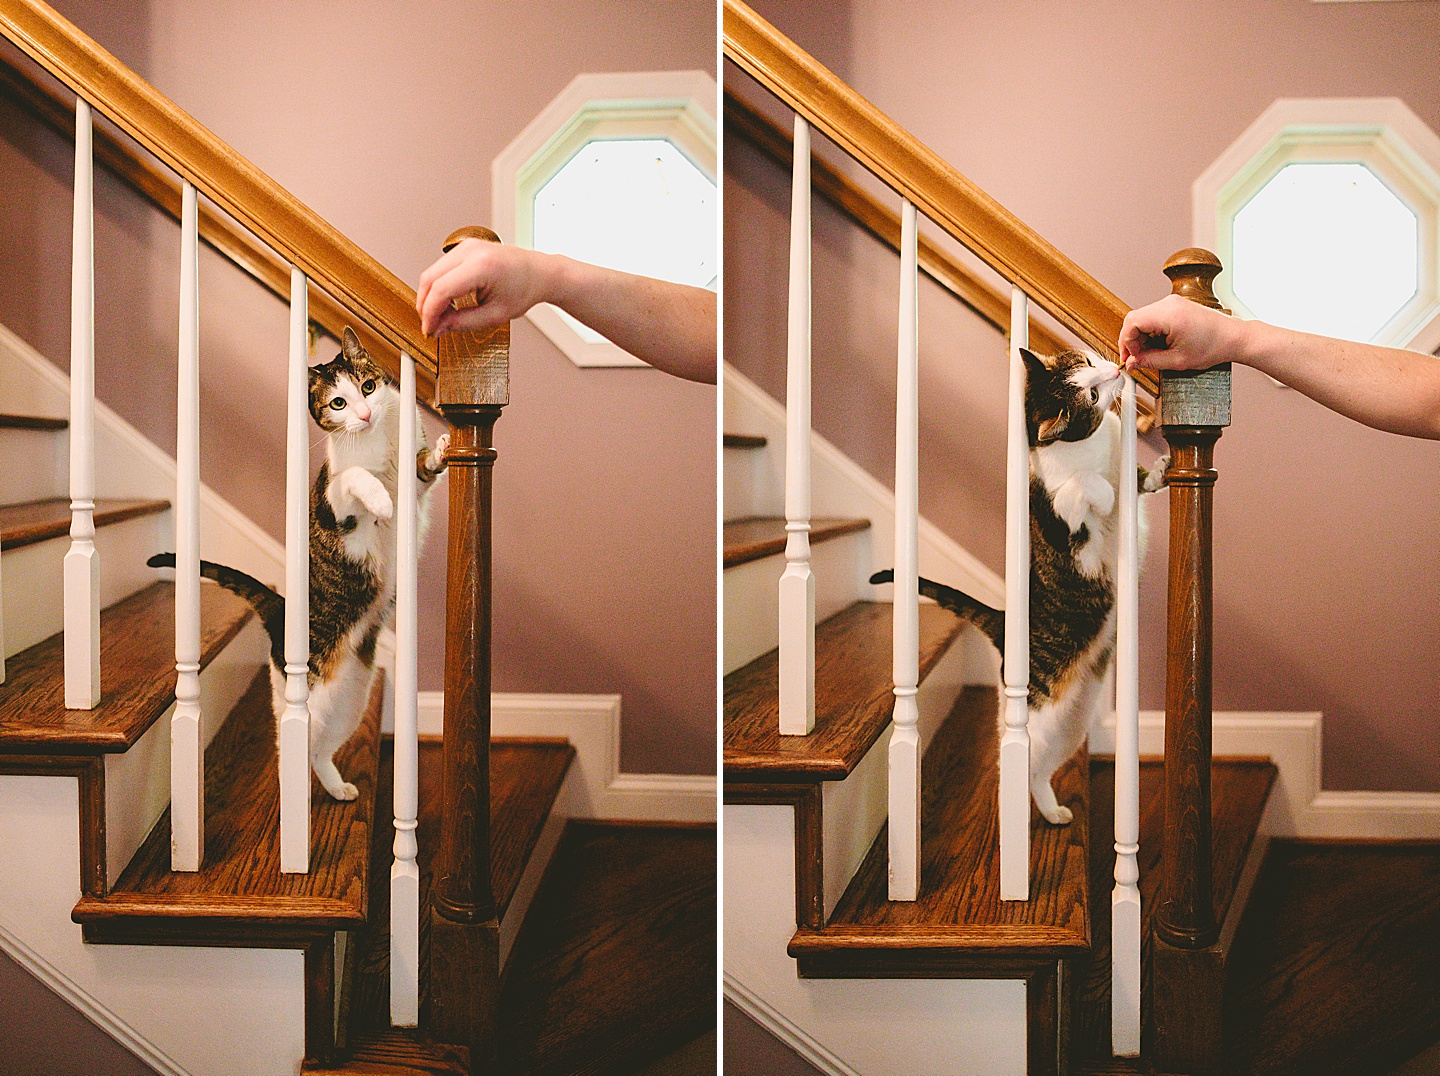 Cat eating treat through a stair railing